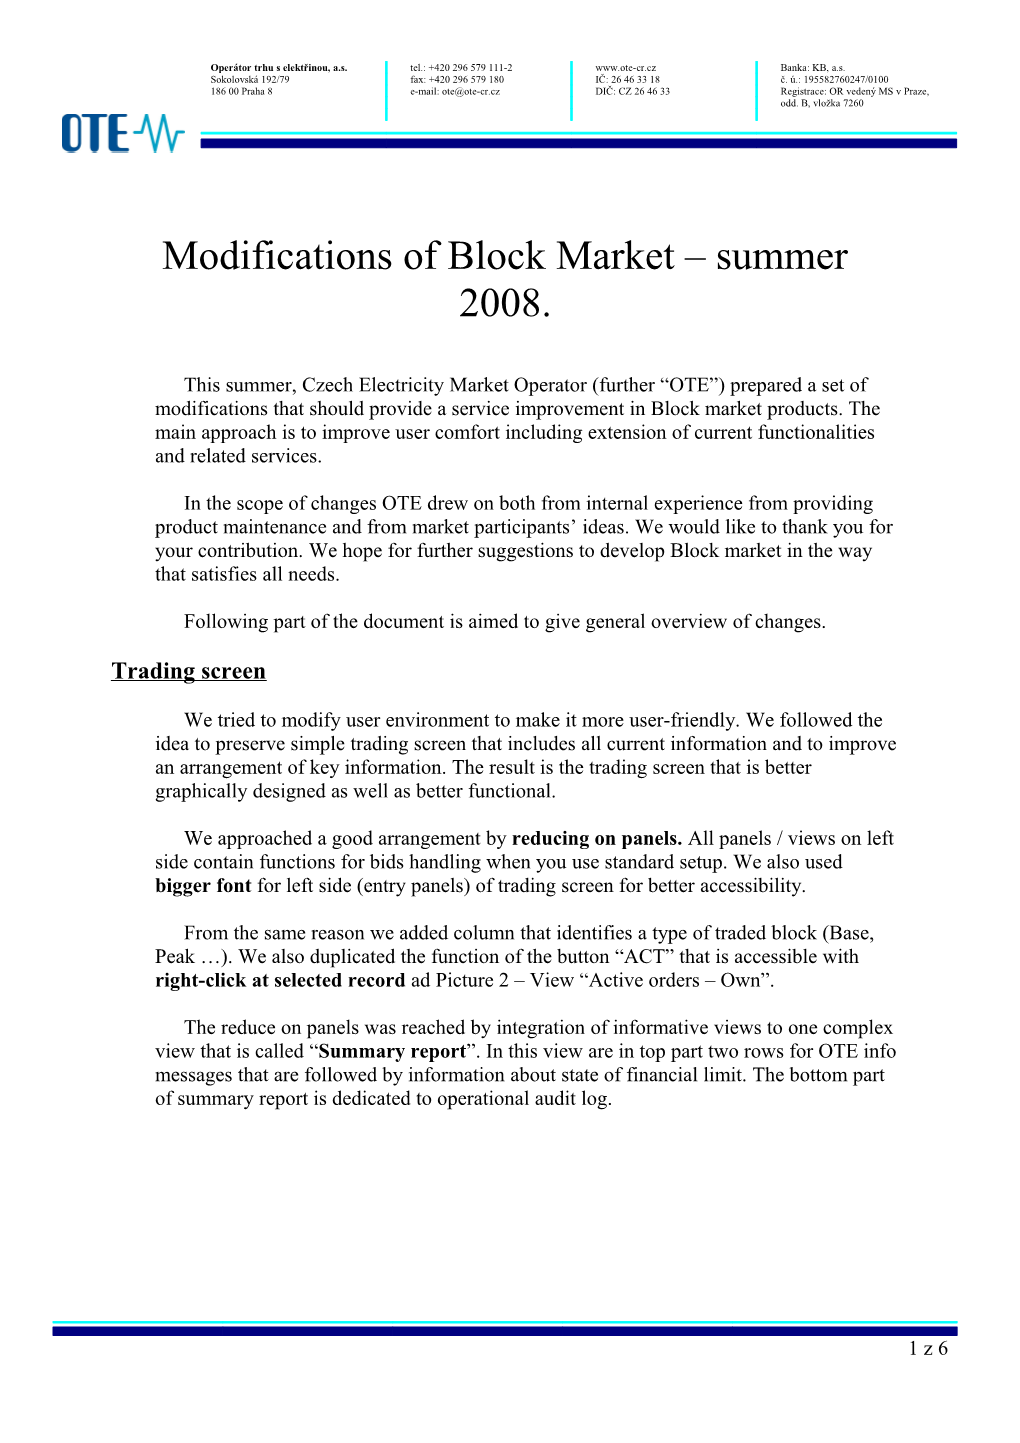 Modifications of Block Market Summer 2008